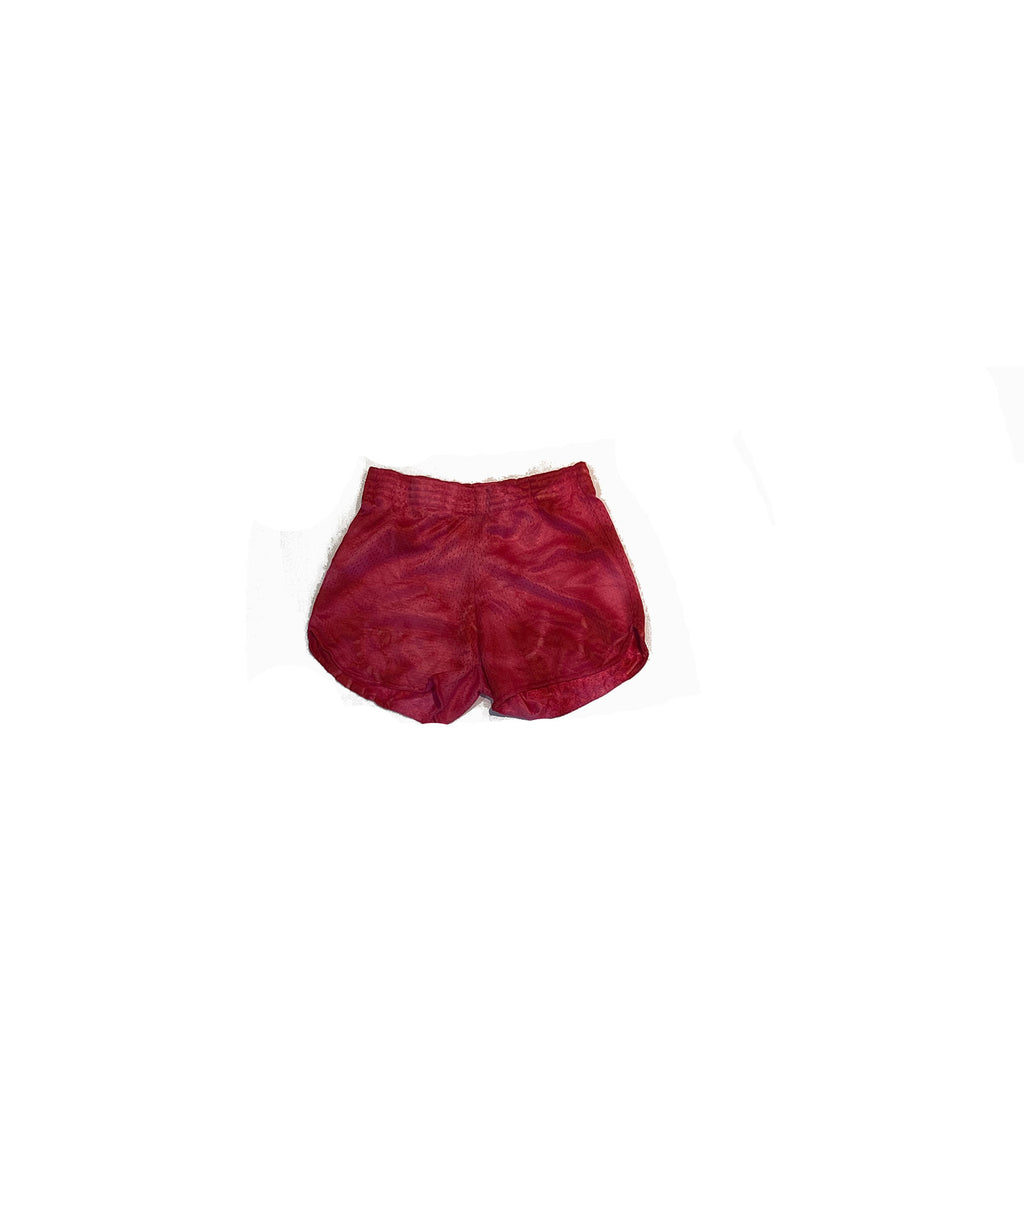 girls red shorts